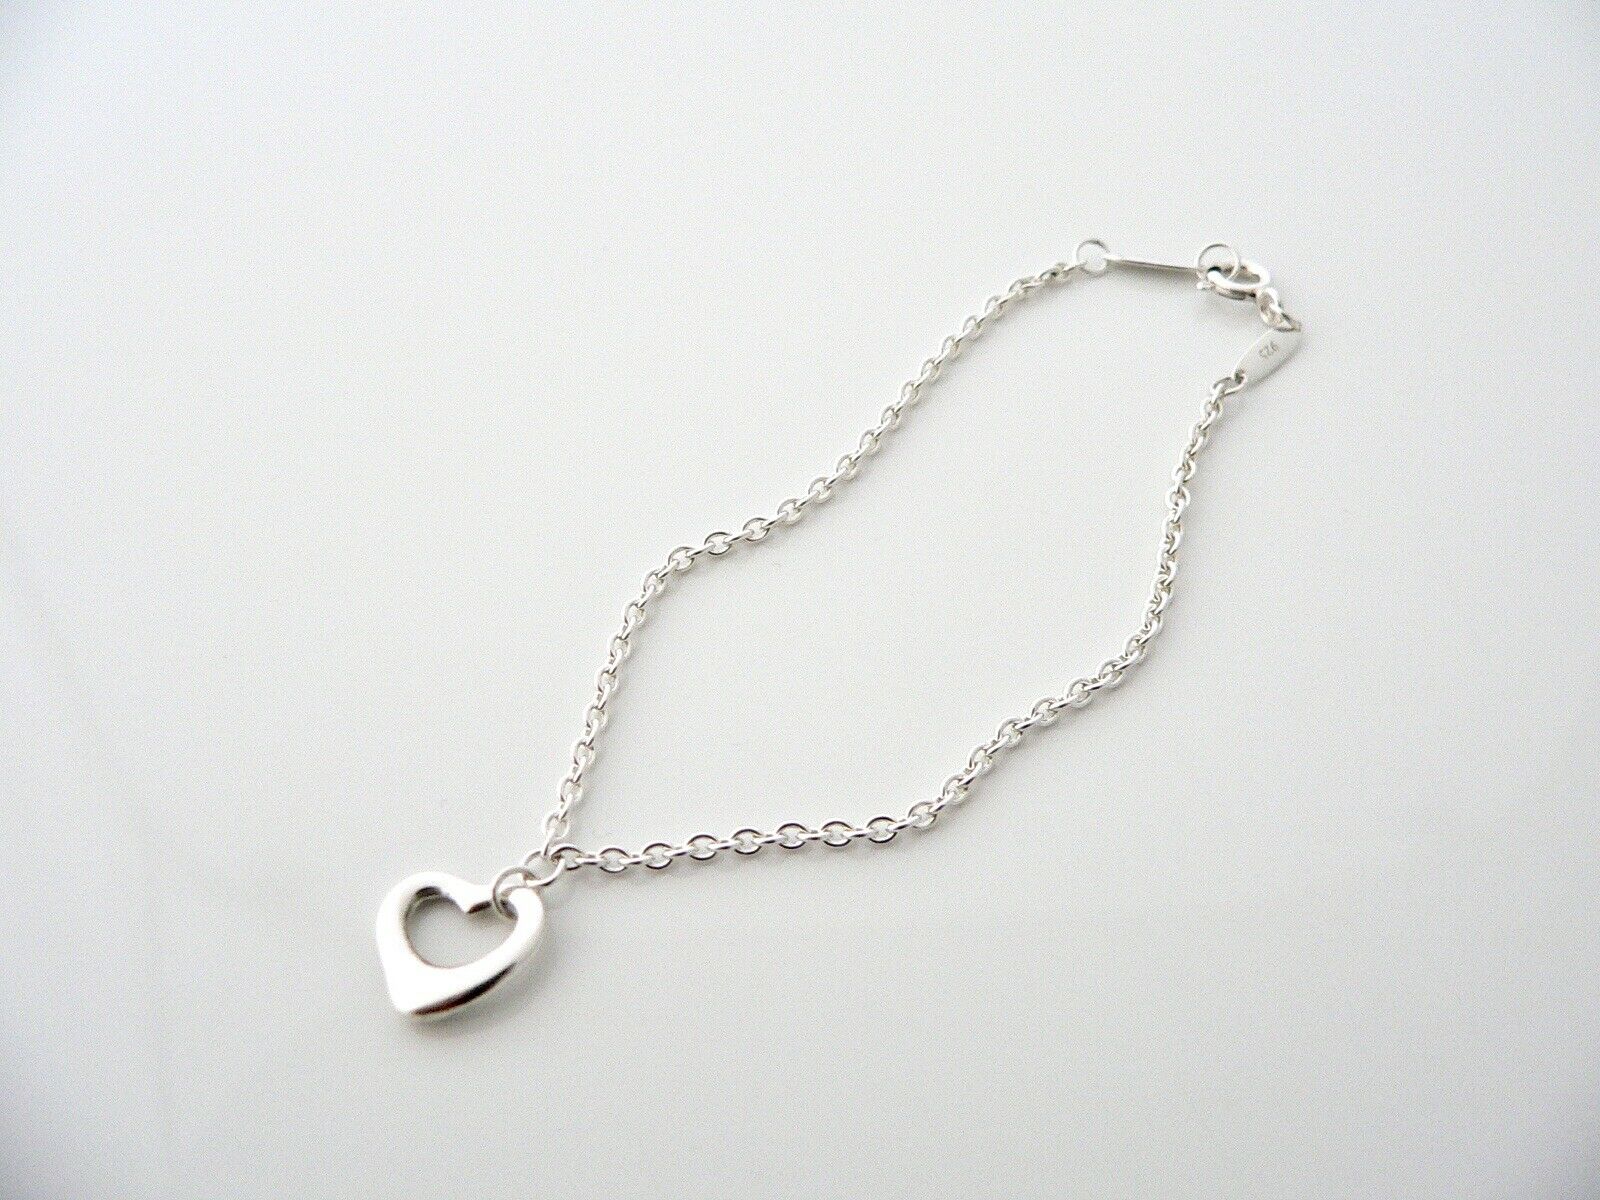 Tiffany & Co Silver Open Heart Bracelet Bangle 6.75 In Chain Gift Love Child Kid